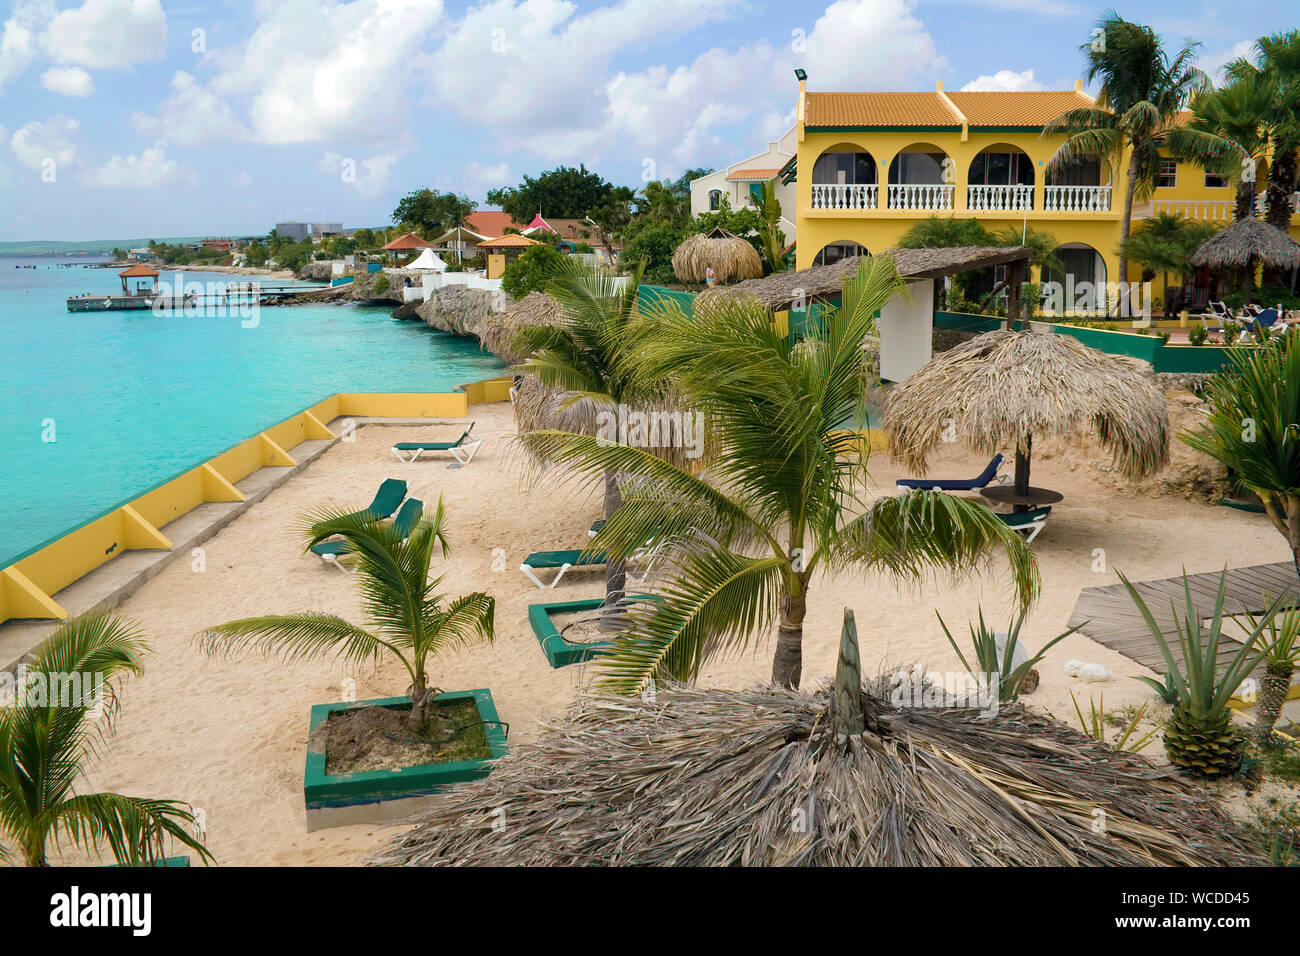 Buddy Dive Resort, popular Dive resort on Bonaire, Netherland Antilles Stock Photo